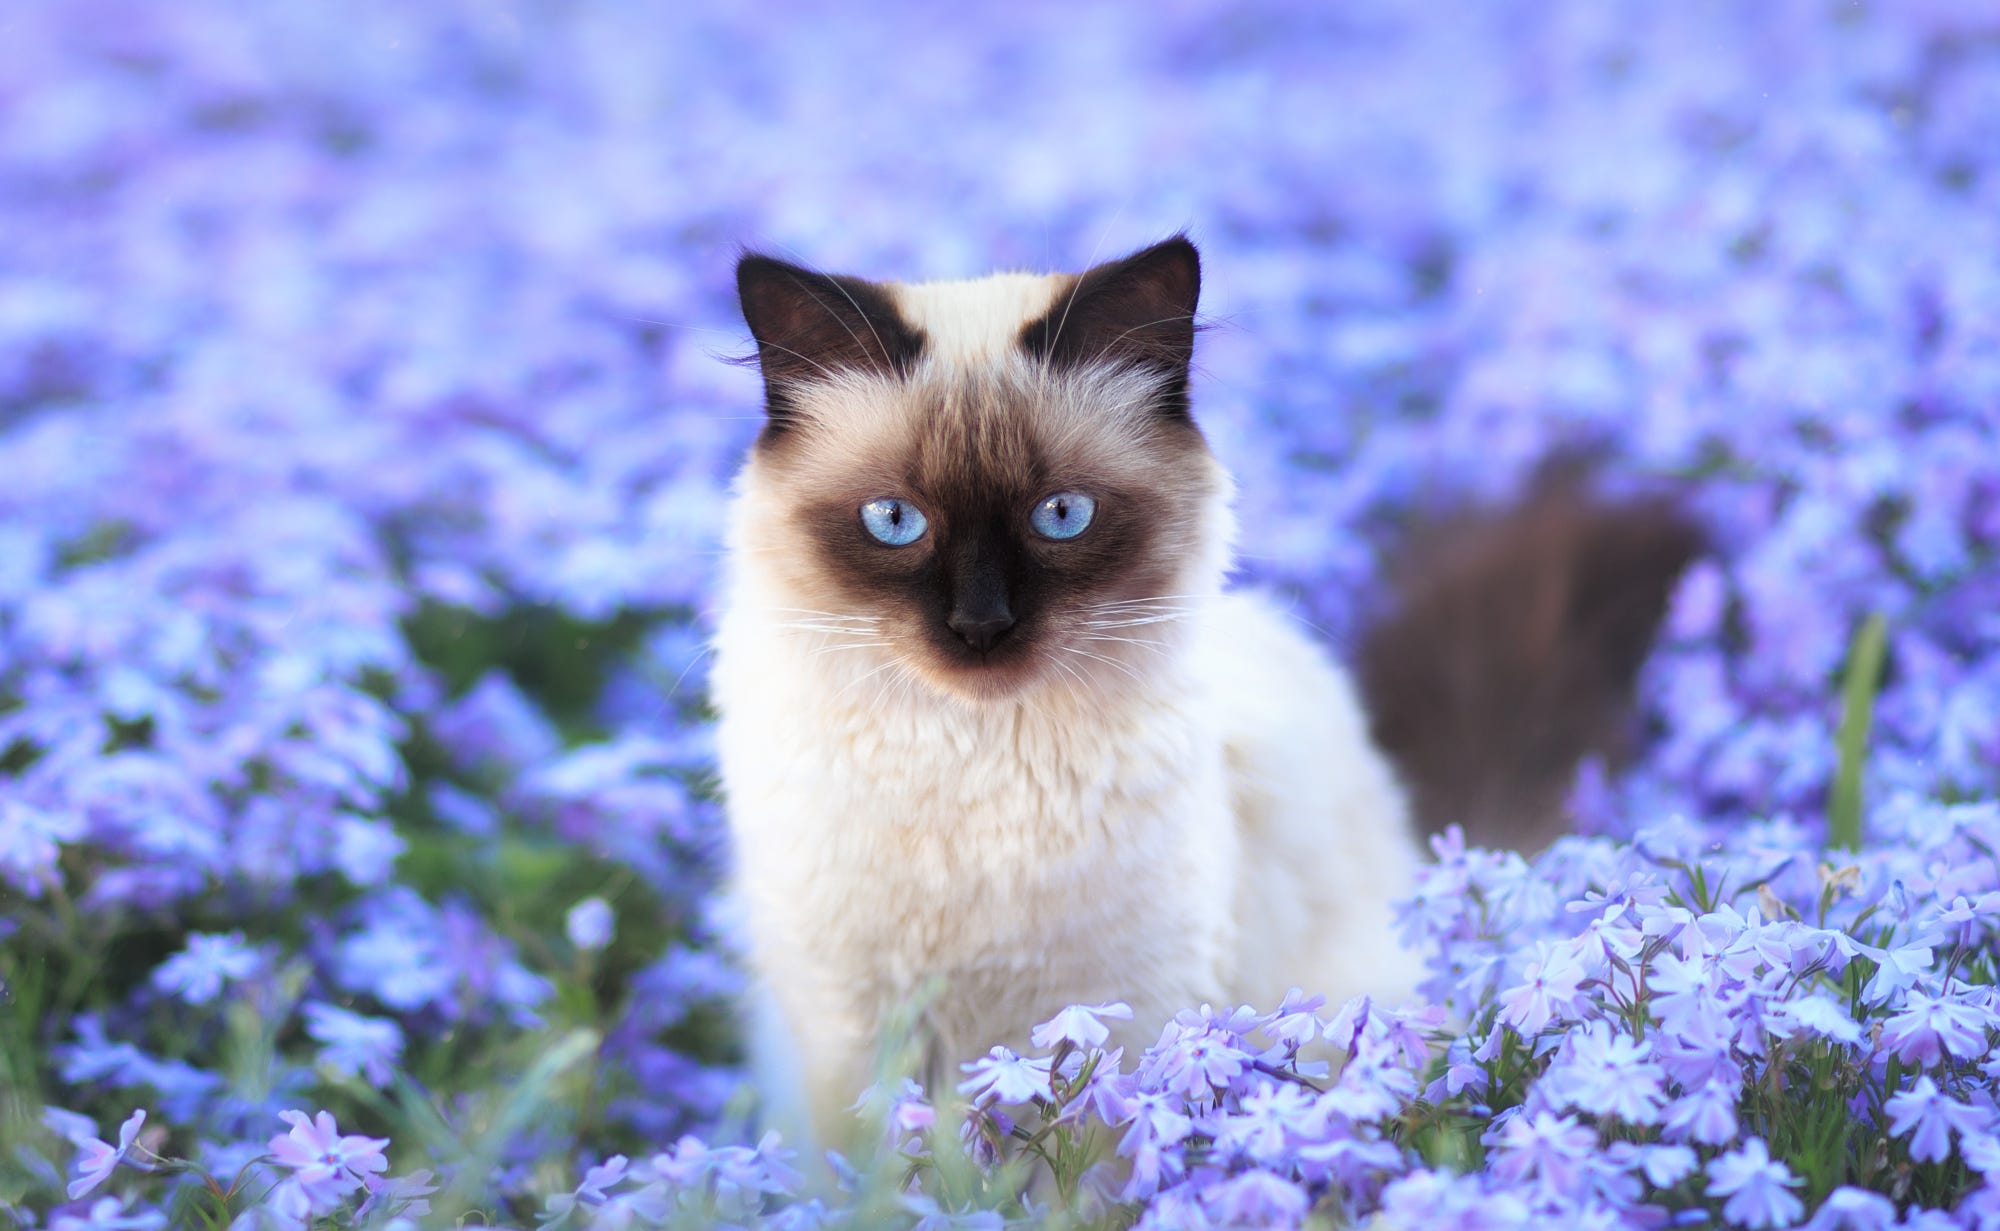 416242 descargar imagen animales, gato, flor azul, campo, flor, gato siames, gatos: fondos de pantalla y protectores de pantalla gratis